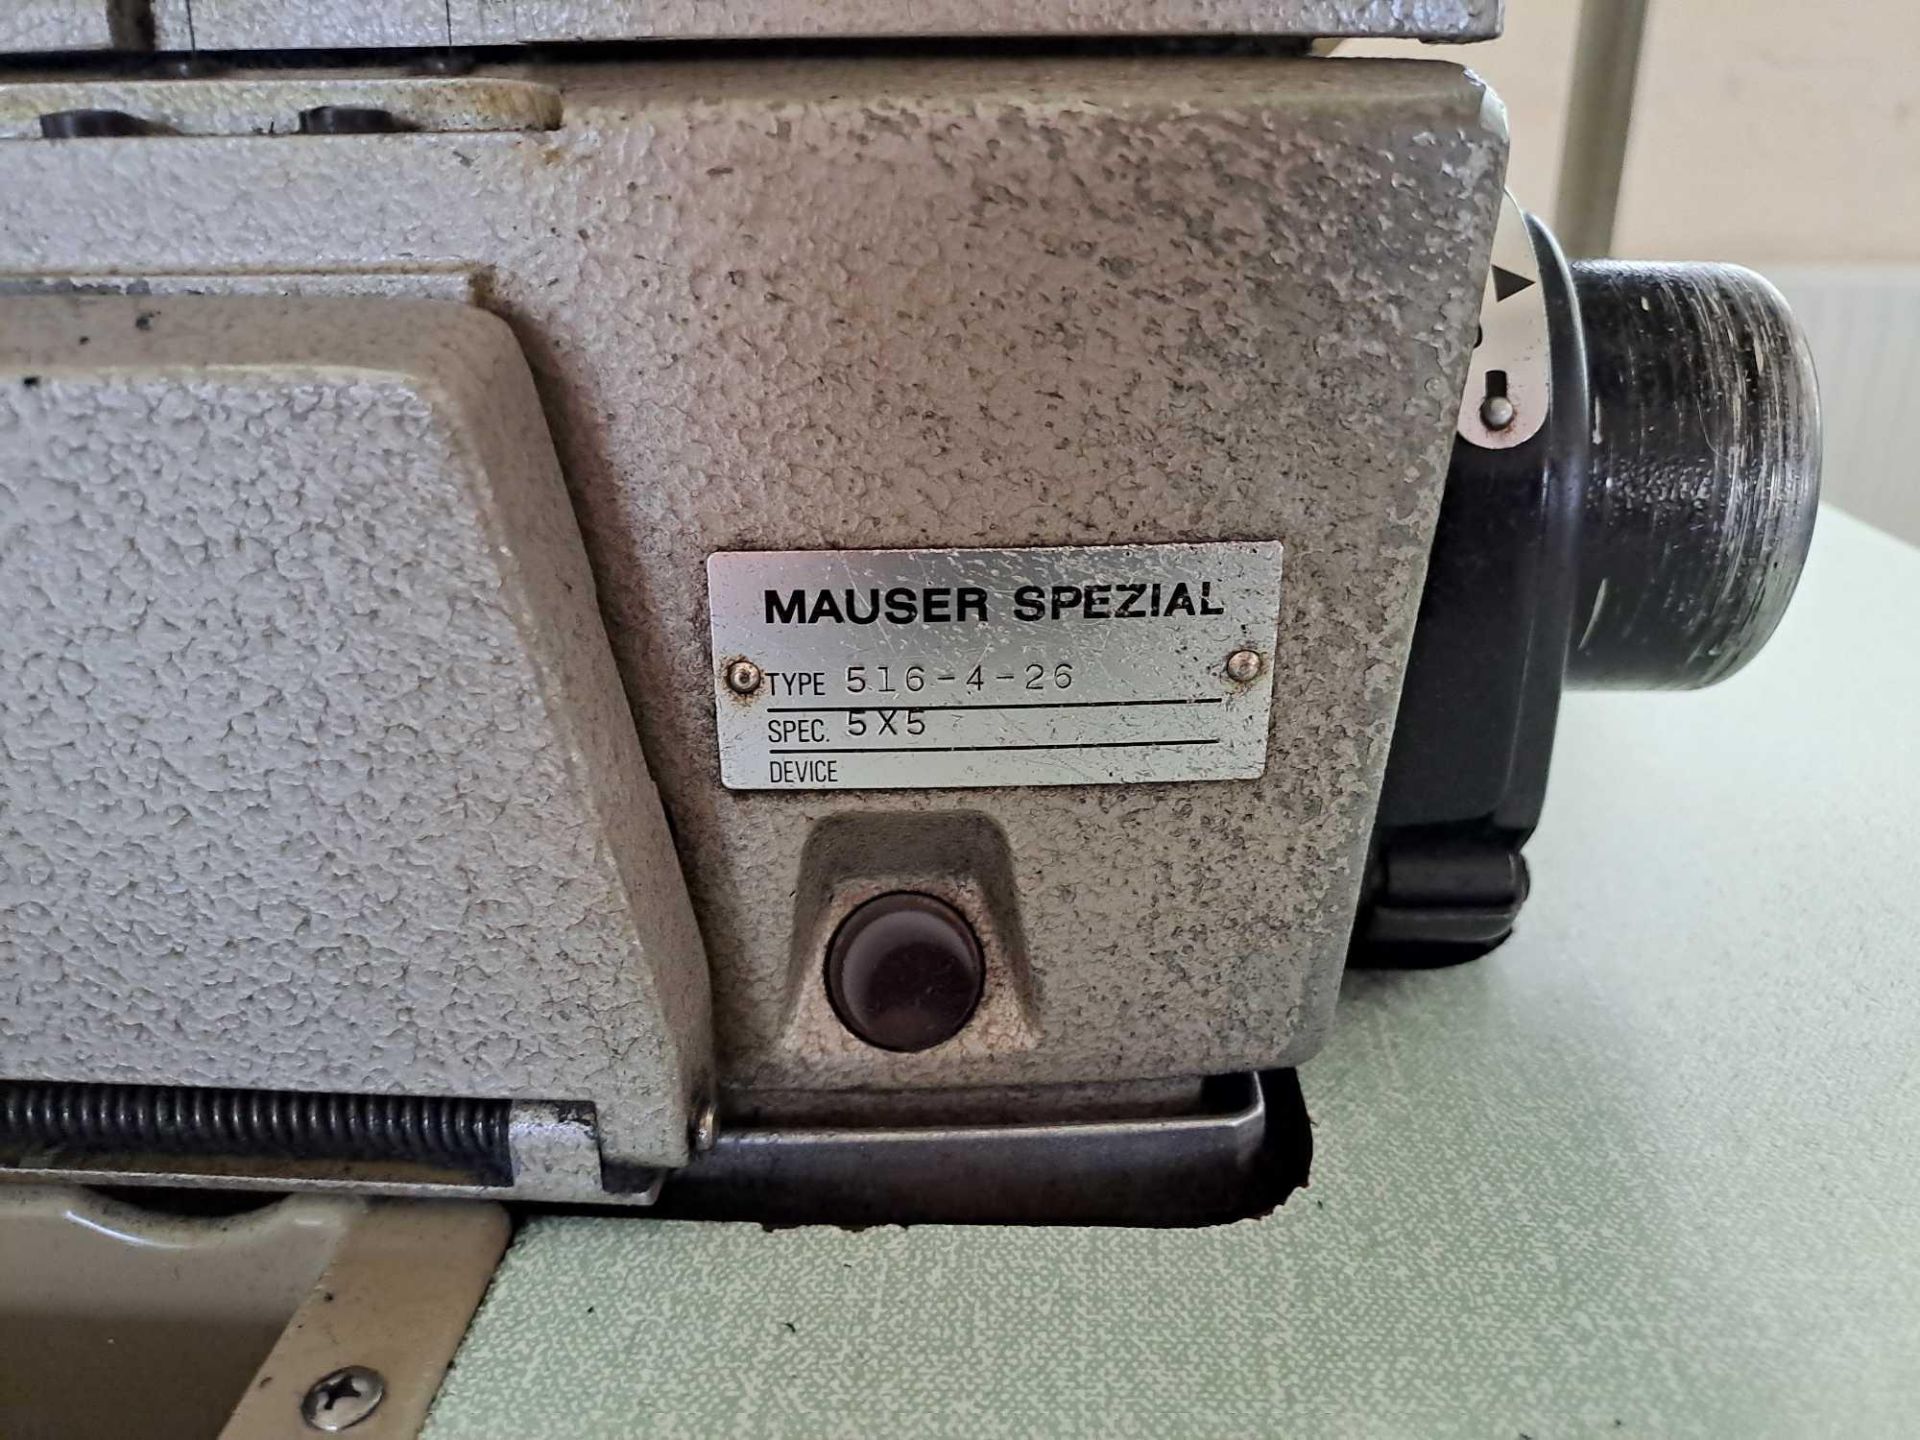 Mauser Spezial 516-4-26 Overlocker Sewing Machine - Image 4 of 6